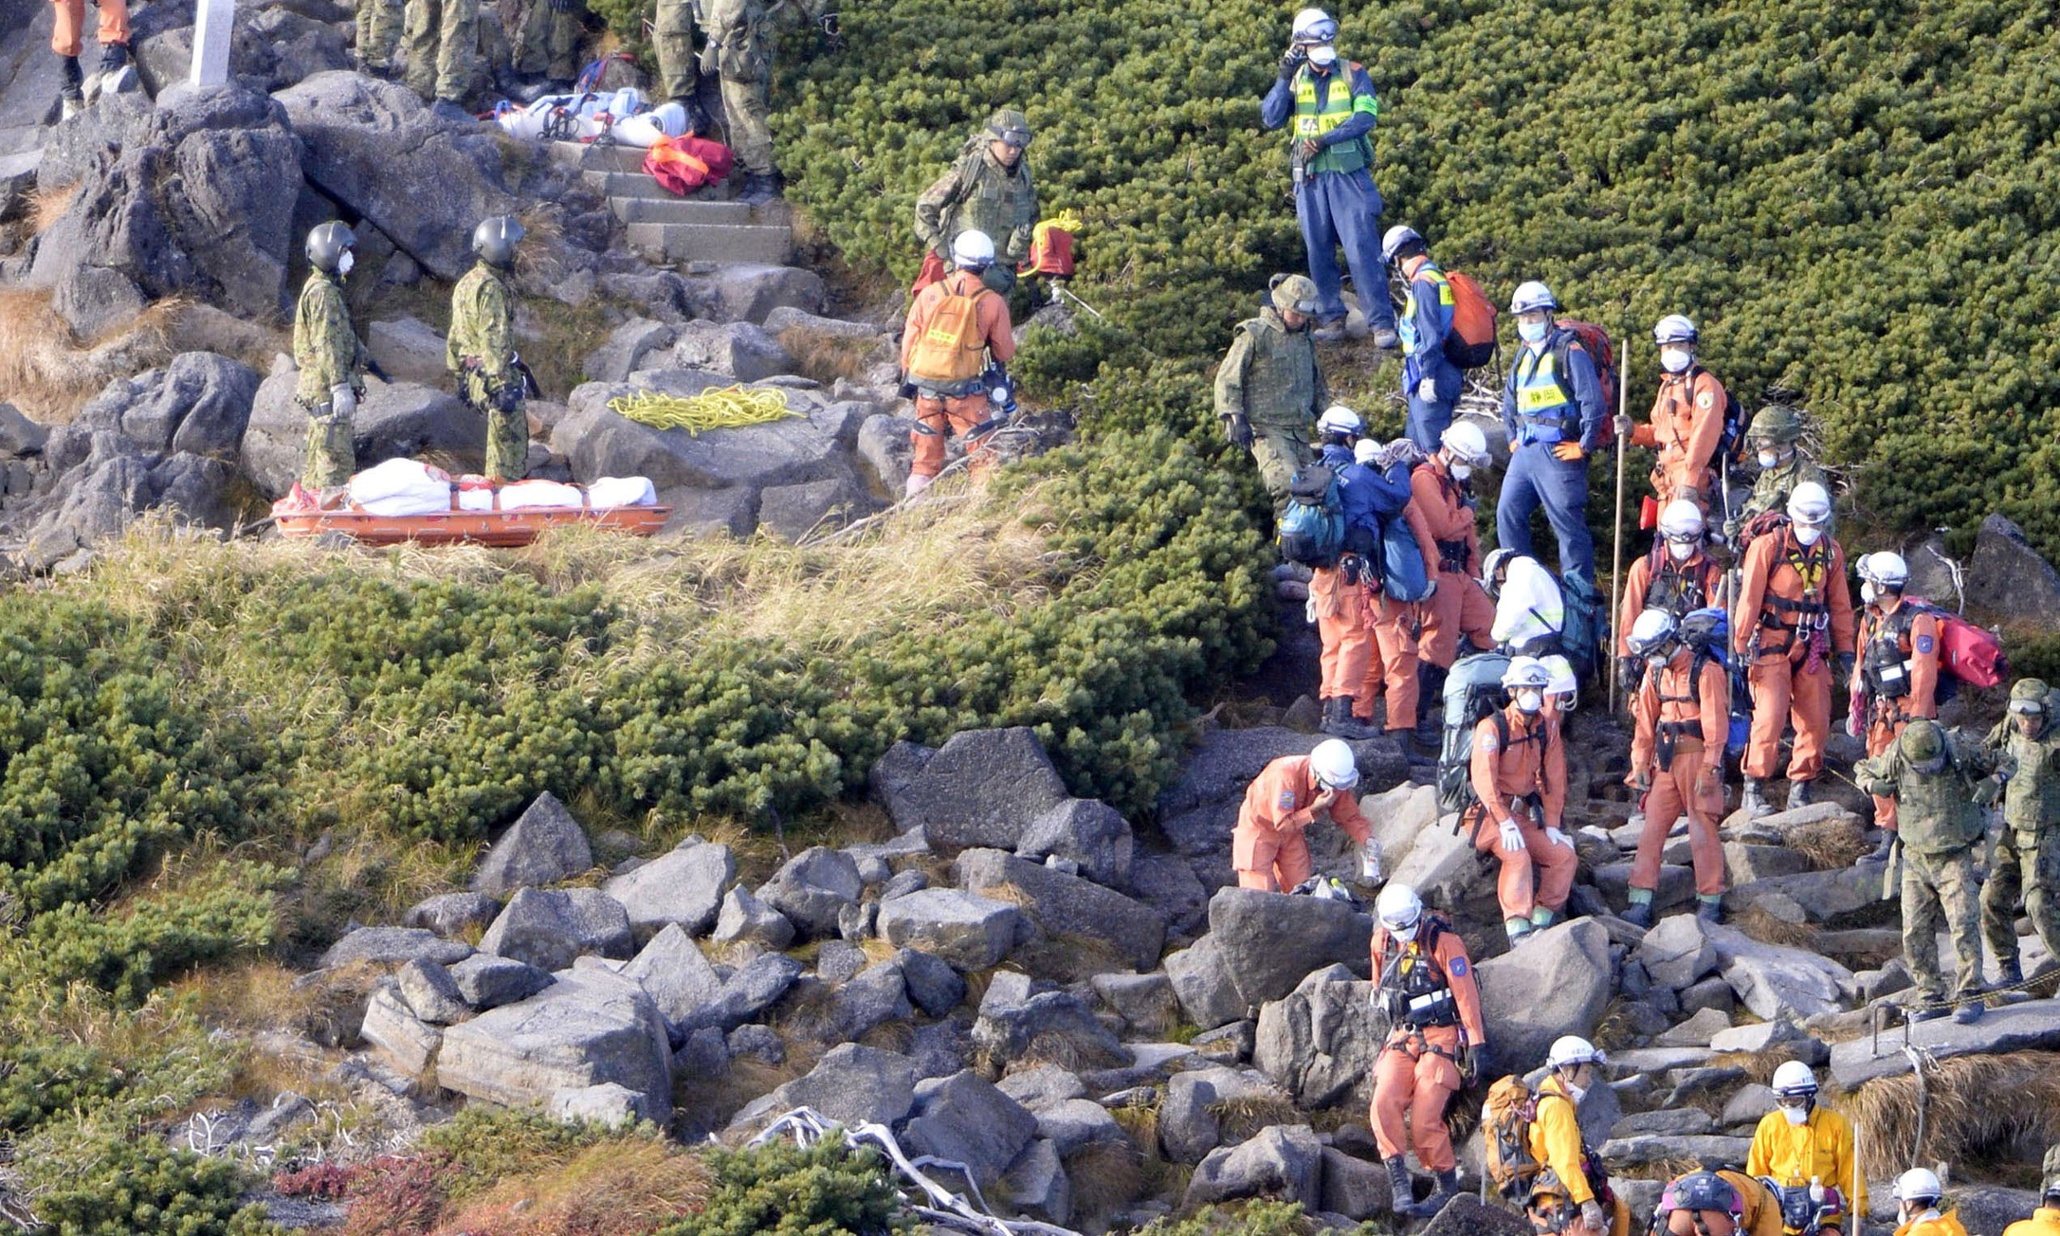 Japanese volcano eruption survivors tell heartbreaking stories of victims | World news ...